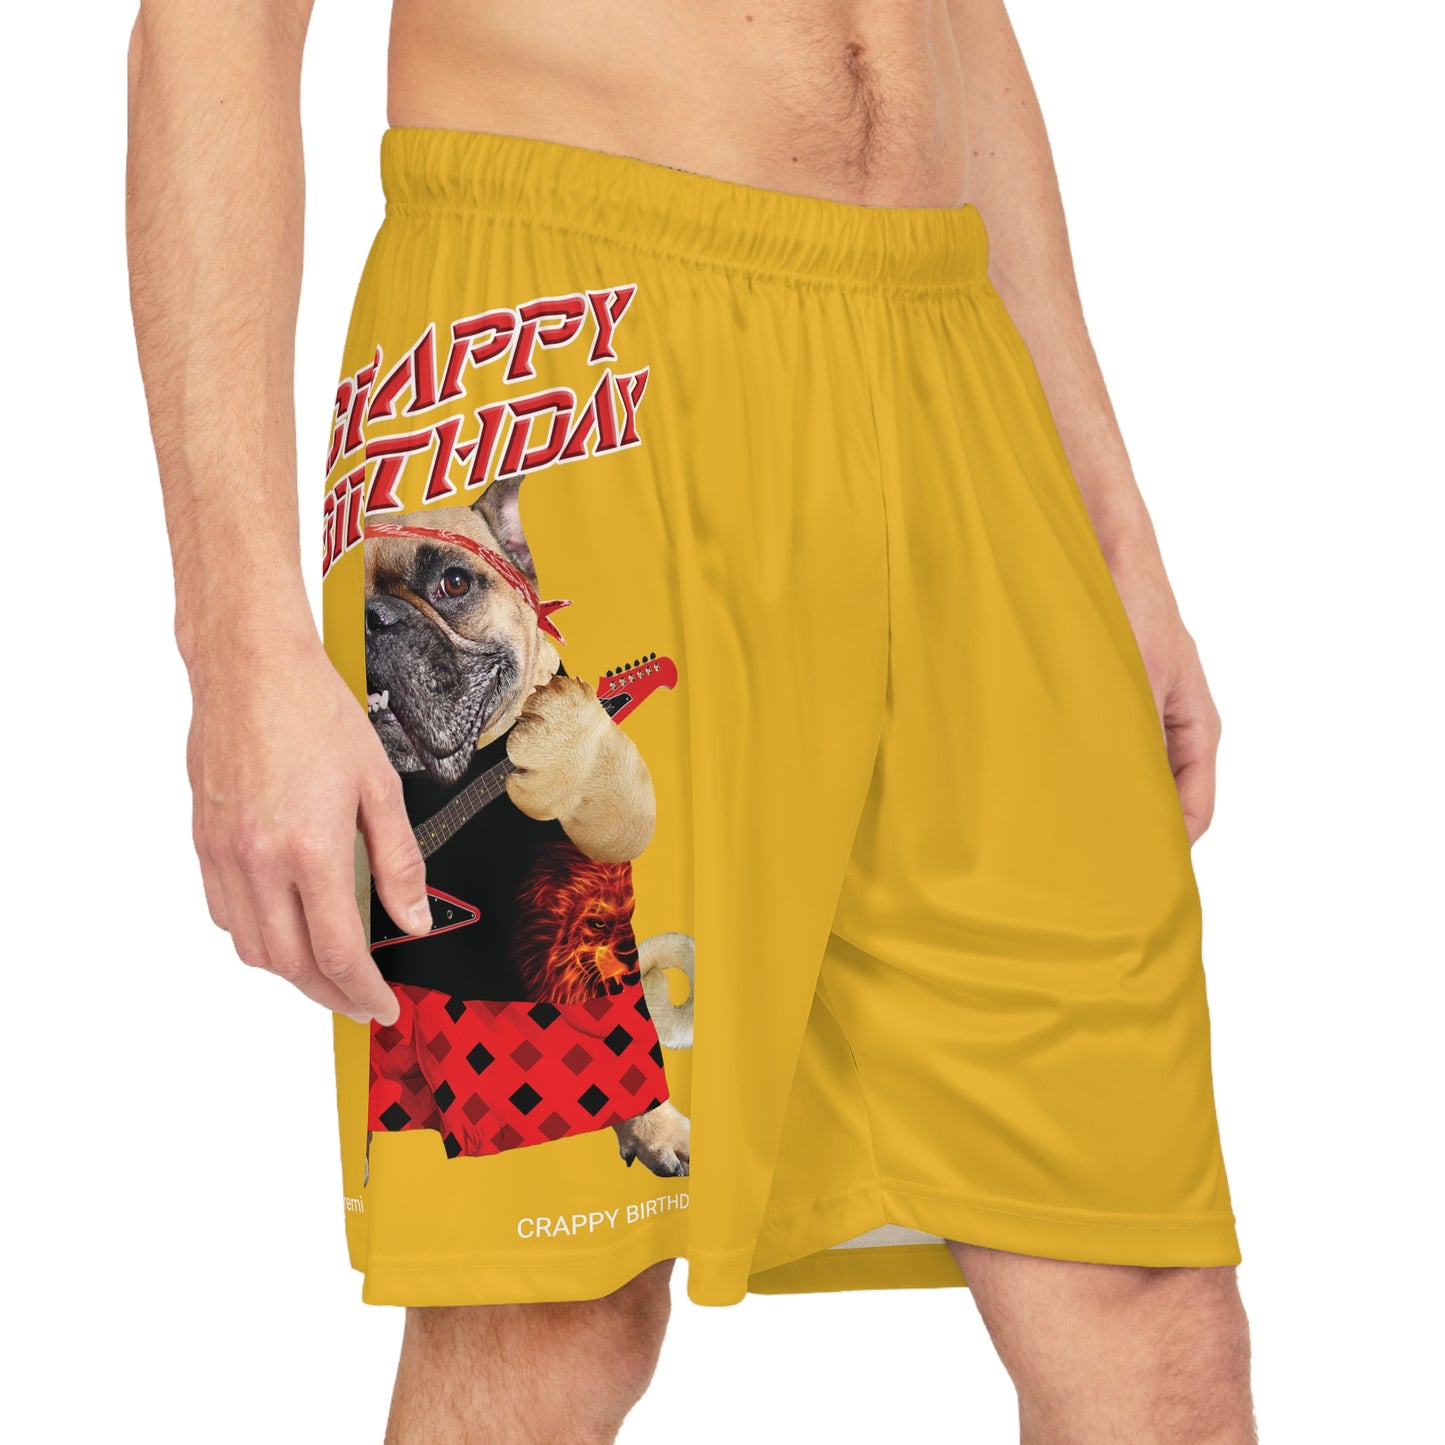 Crappy Birthday II Basketball Shorts - Yellow